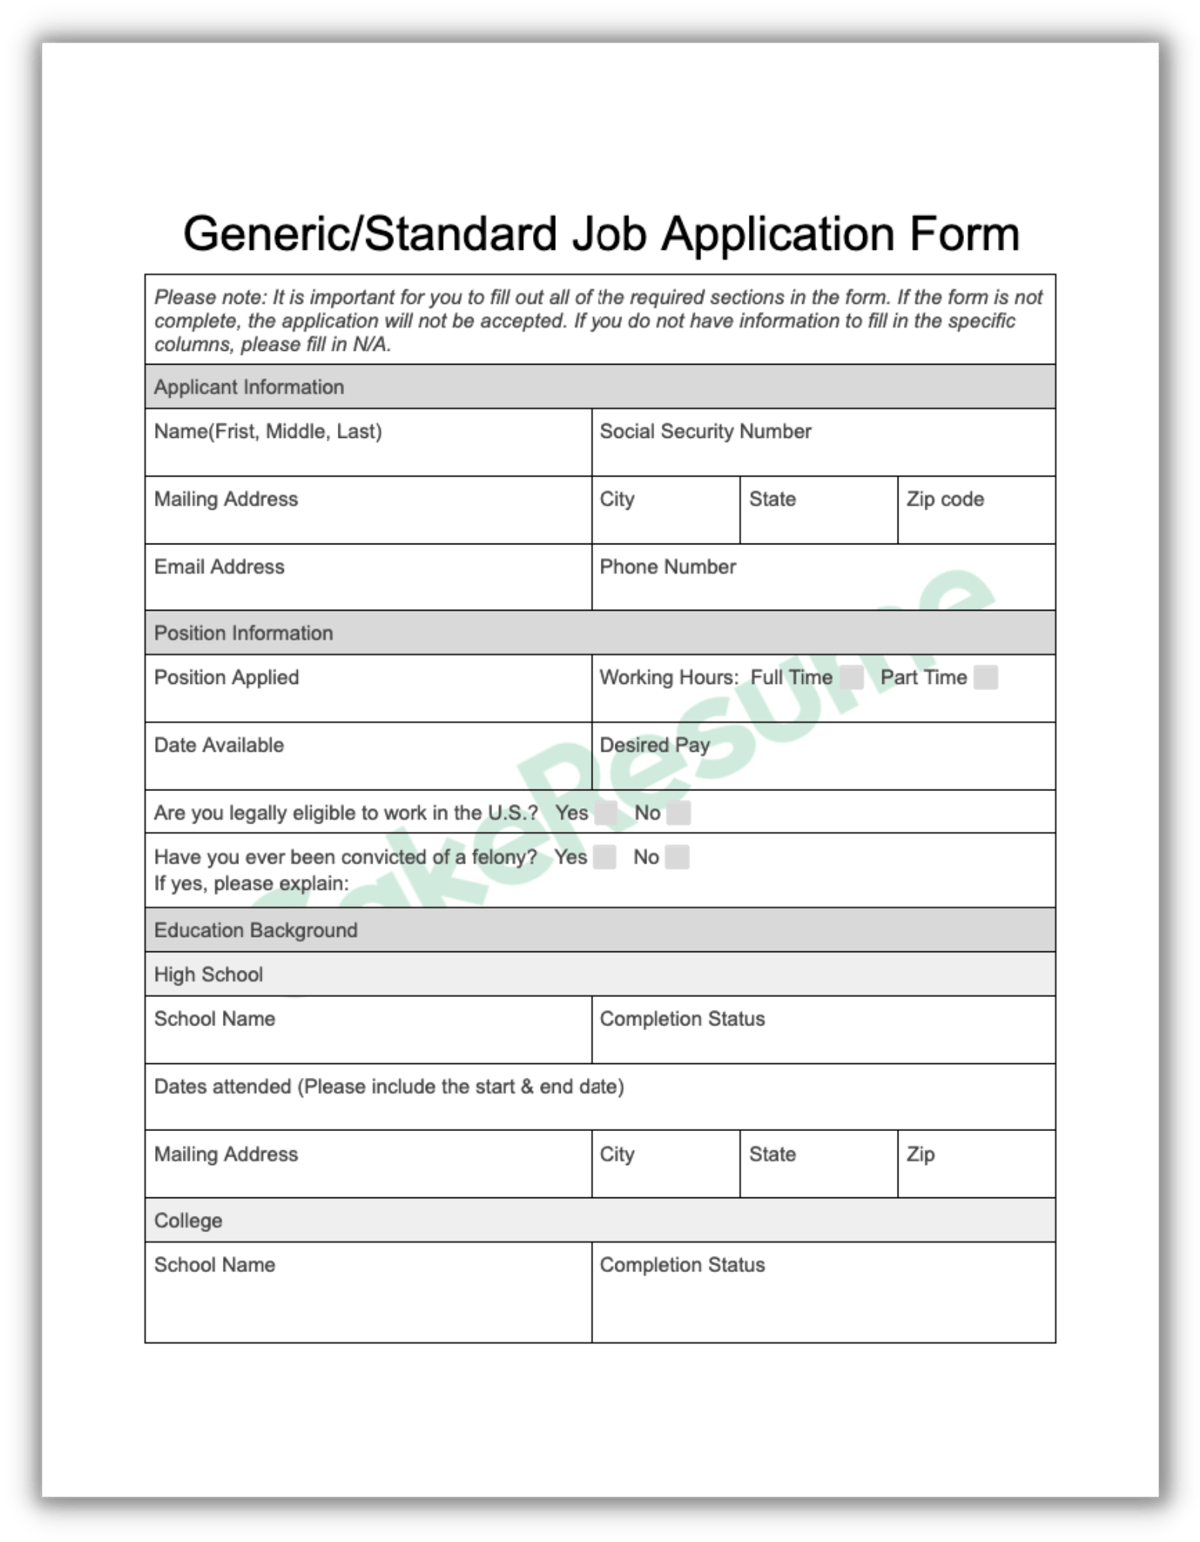 Generic/Standard job application form sample